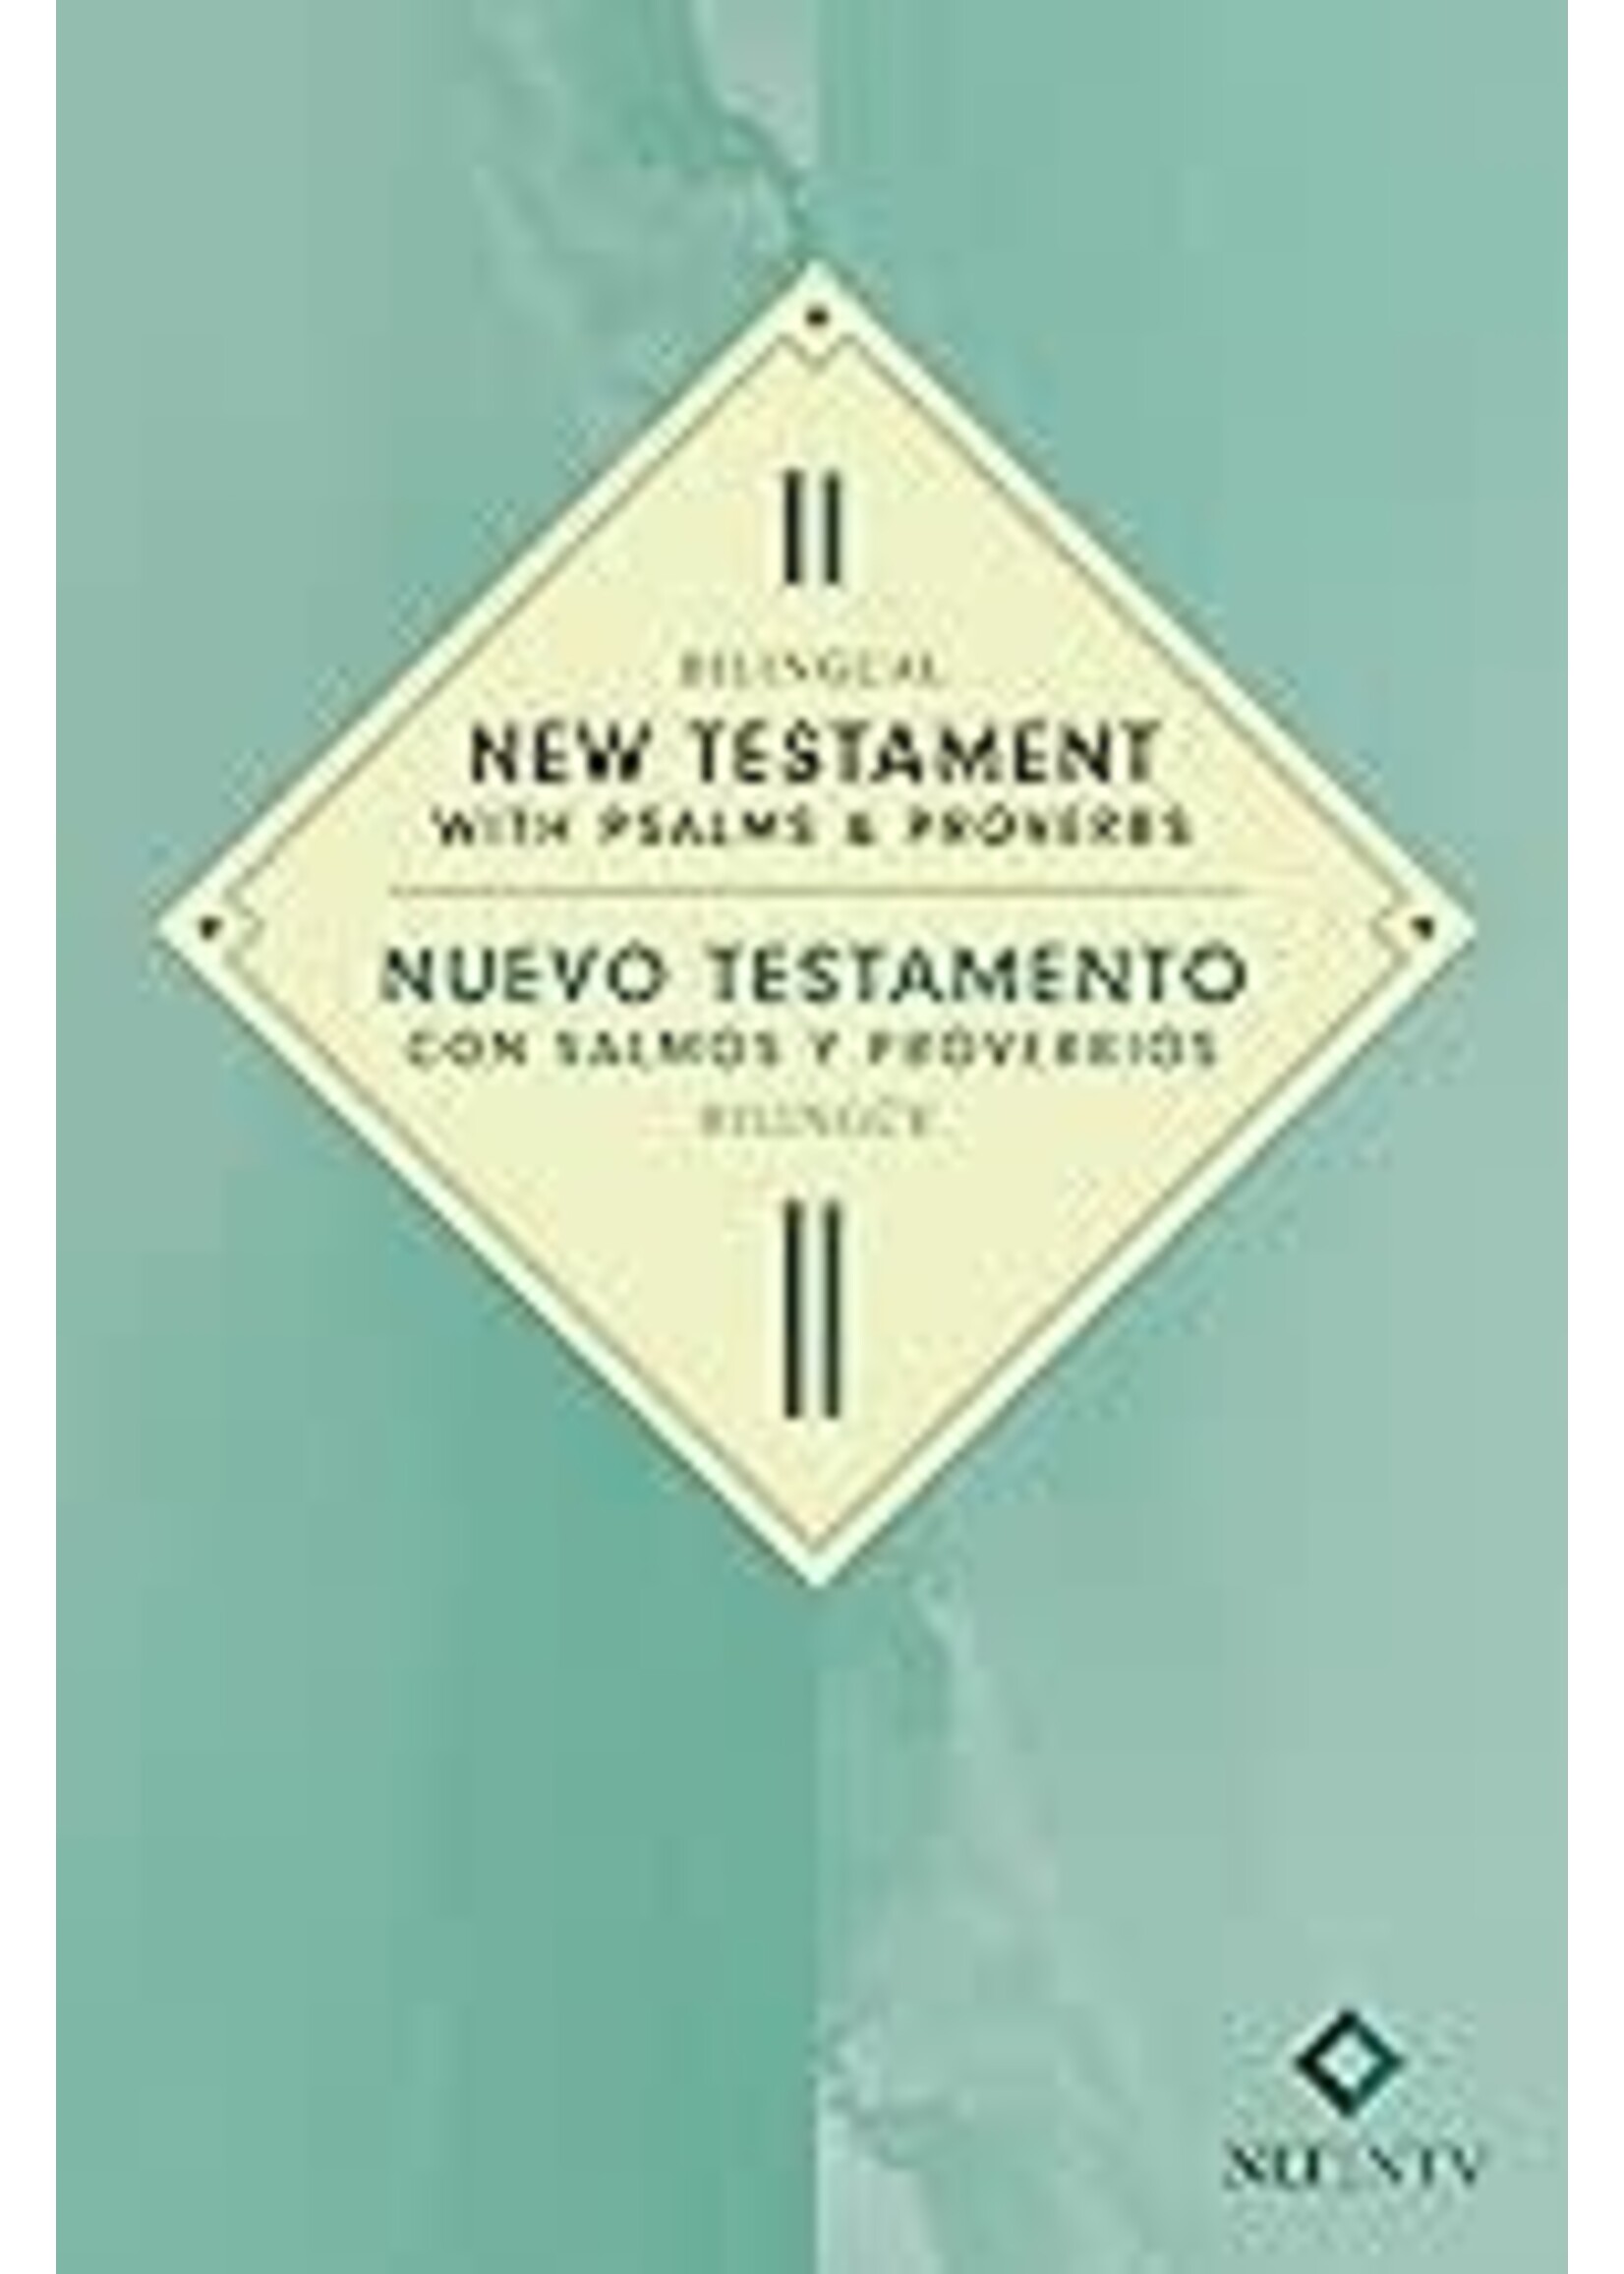 NLT/NTV Bilingual New Testament With Psalms & Proverbs (Nuevo Testamento con Salmos y Proverbios bilingue)-Softcover